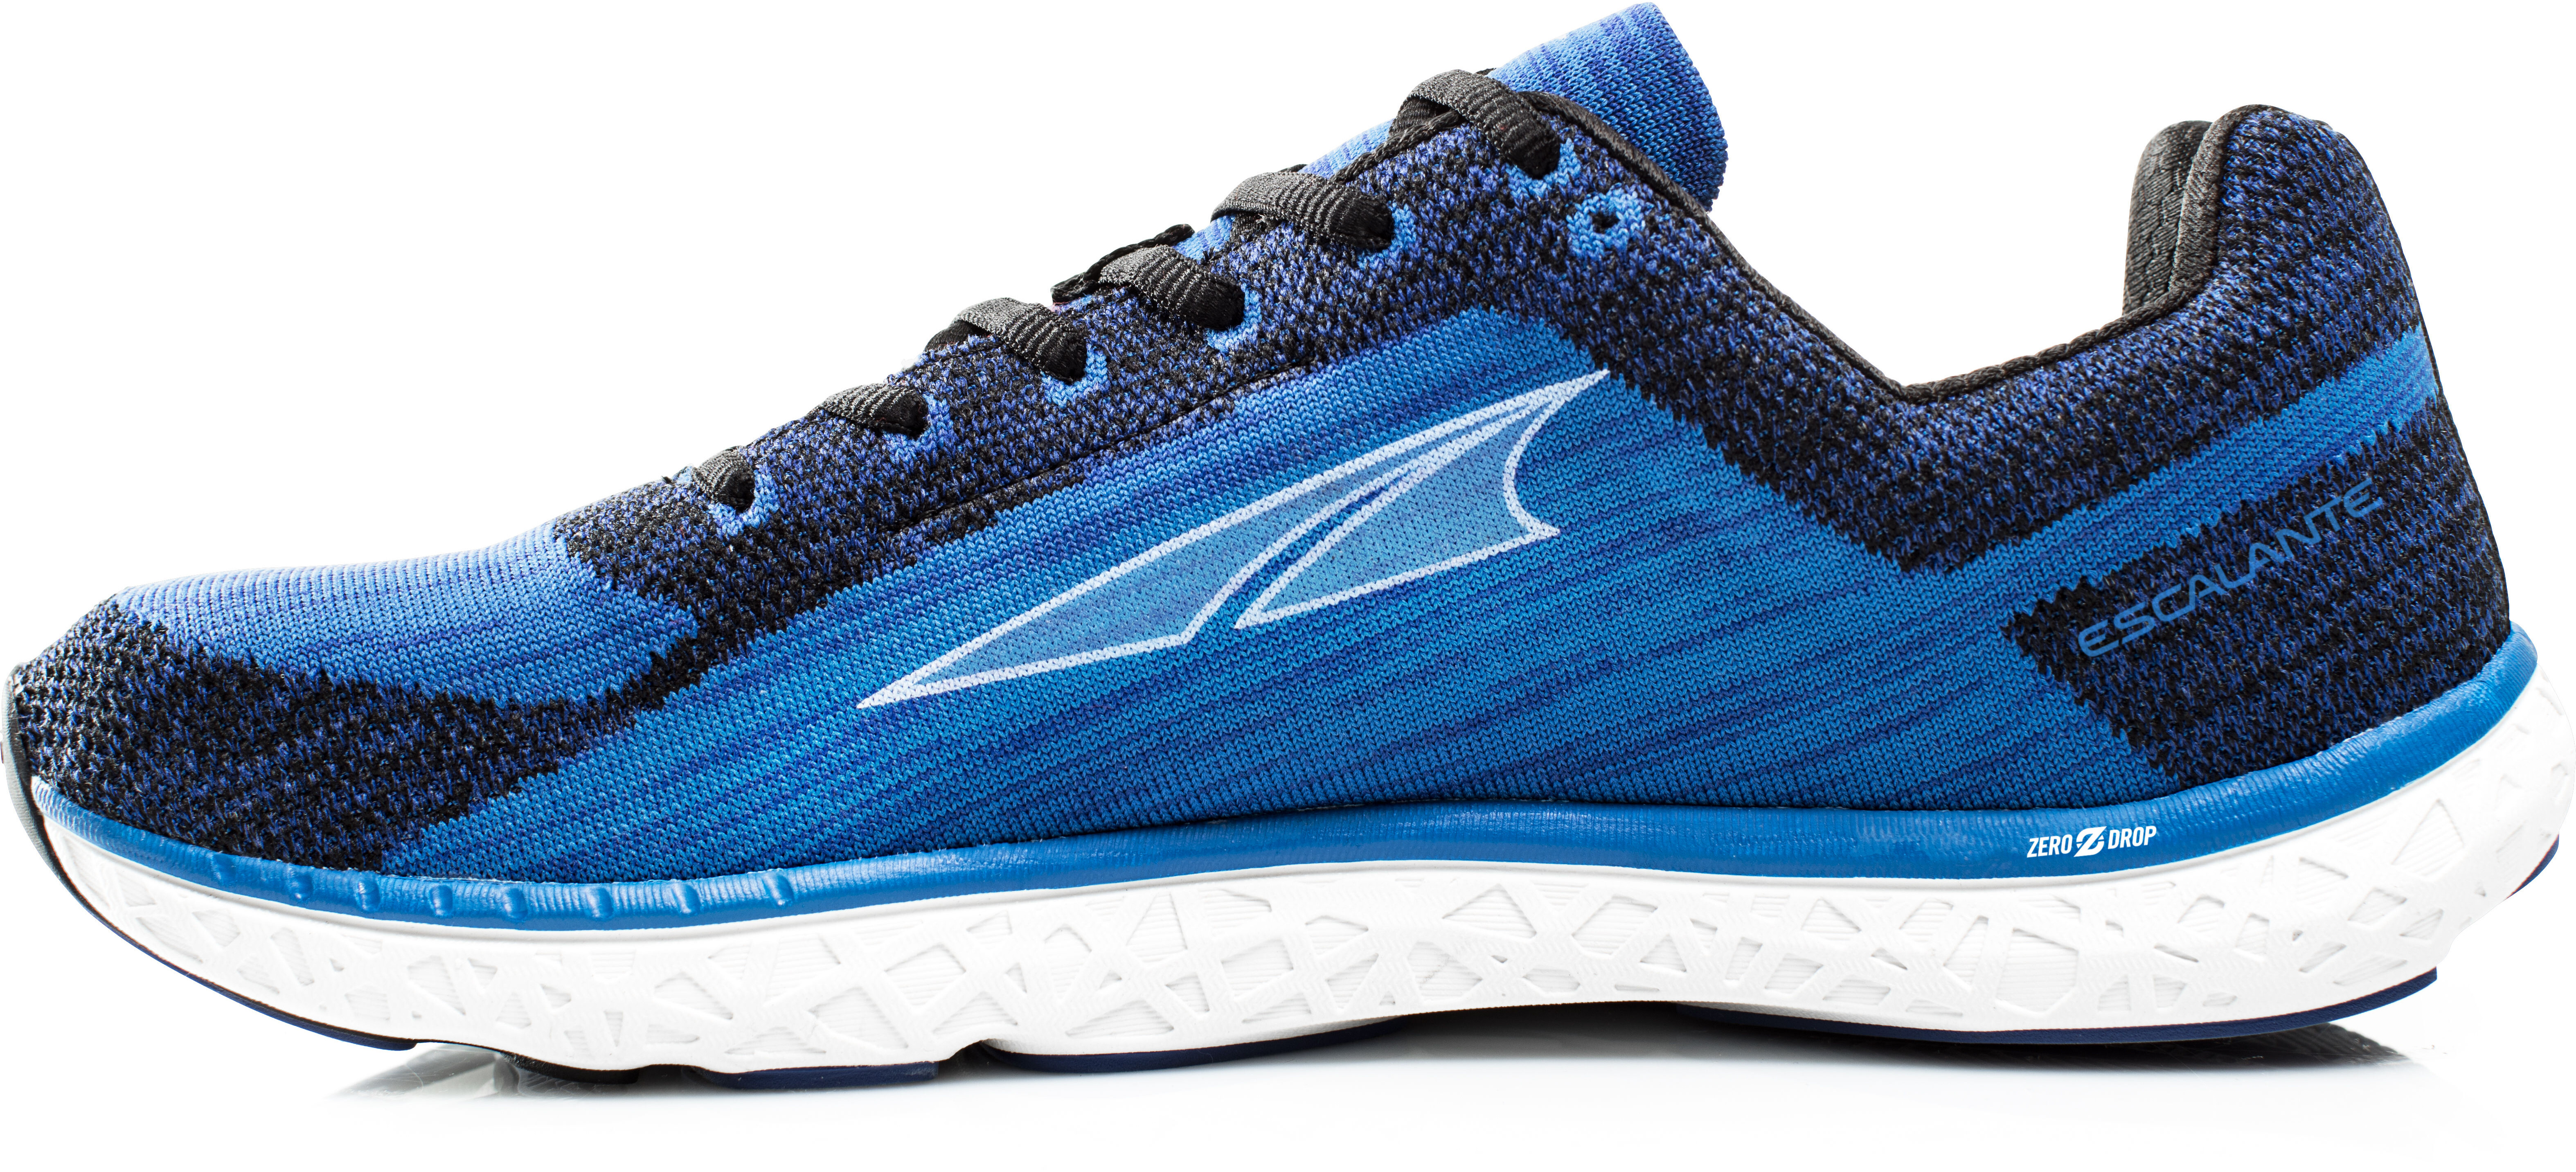 Altra Escalante Road Running Shoes Men blue online kaufen